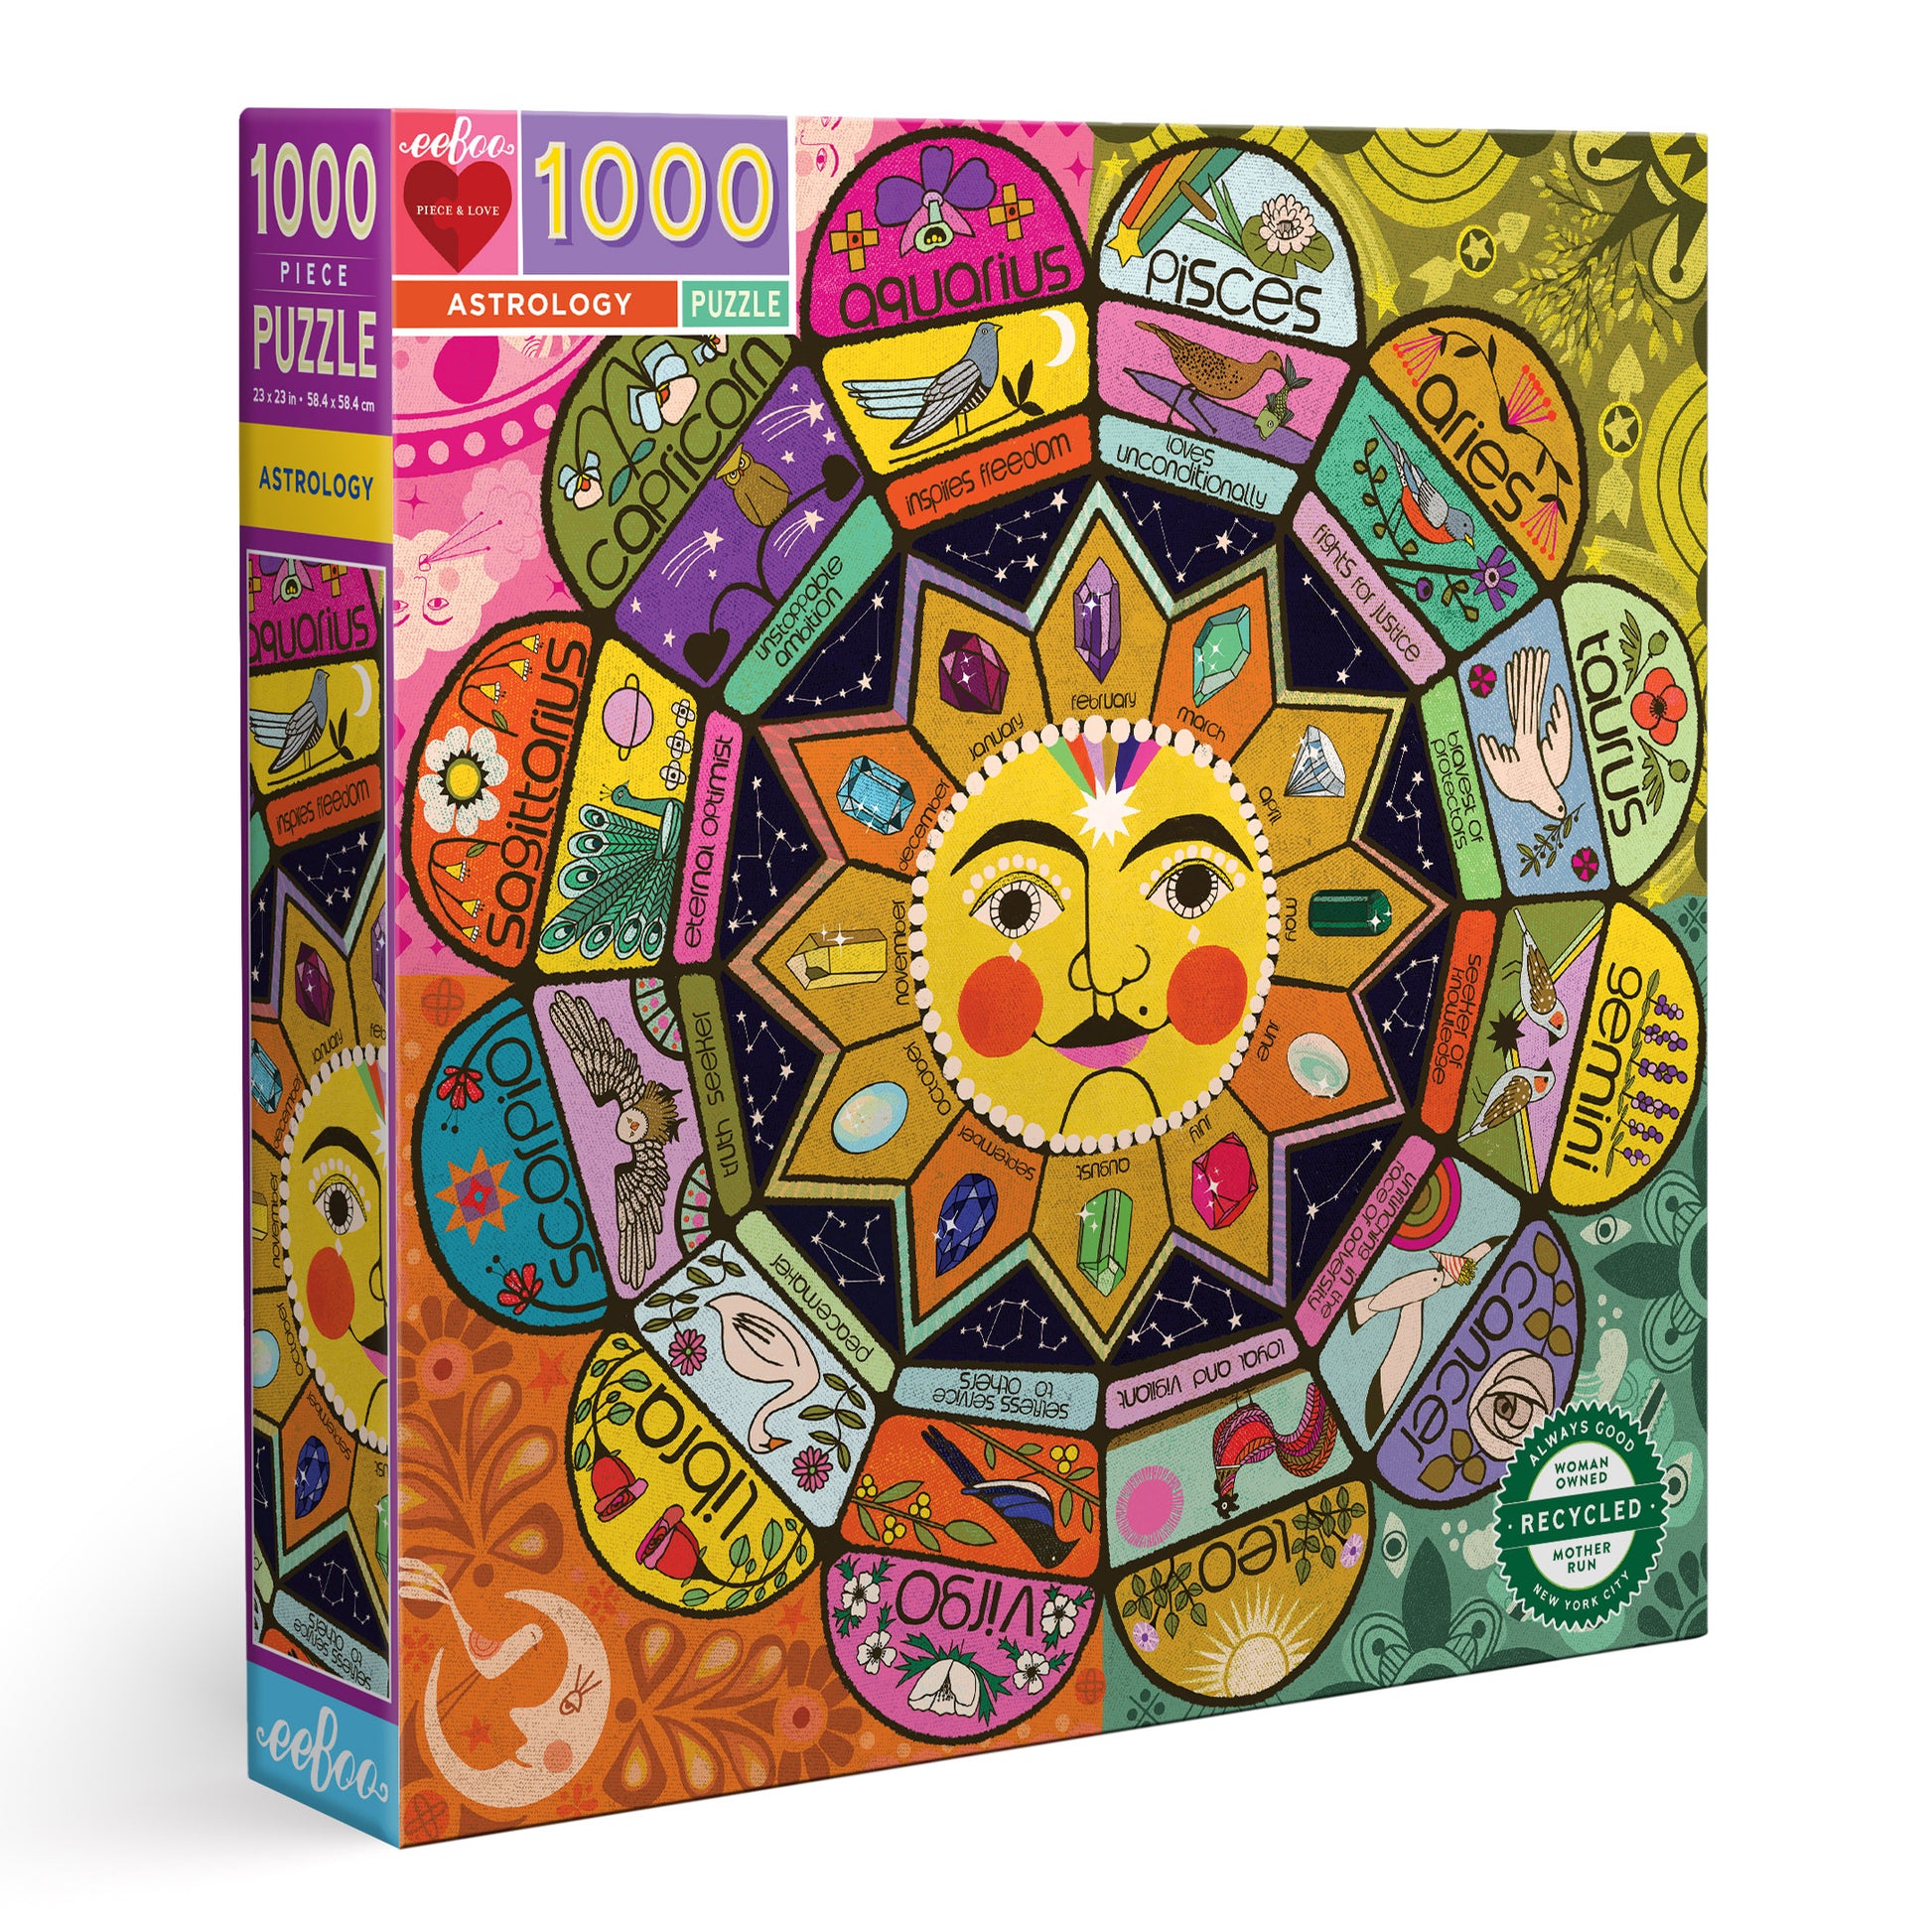 Astrology 1000 Piece Zodiac Horoscope Jigsaw Puzzle | eeBoo Piece & Love | Gifts for Women Mom Wife